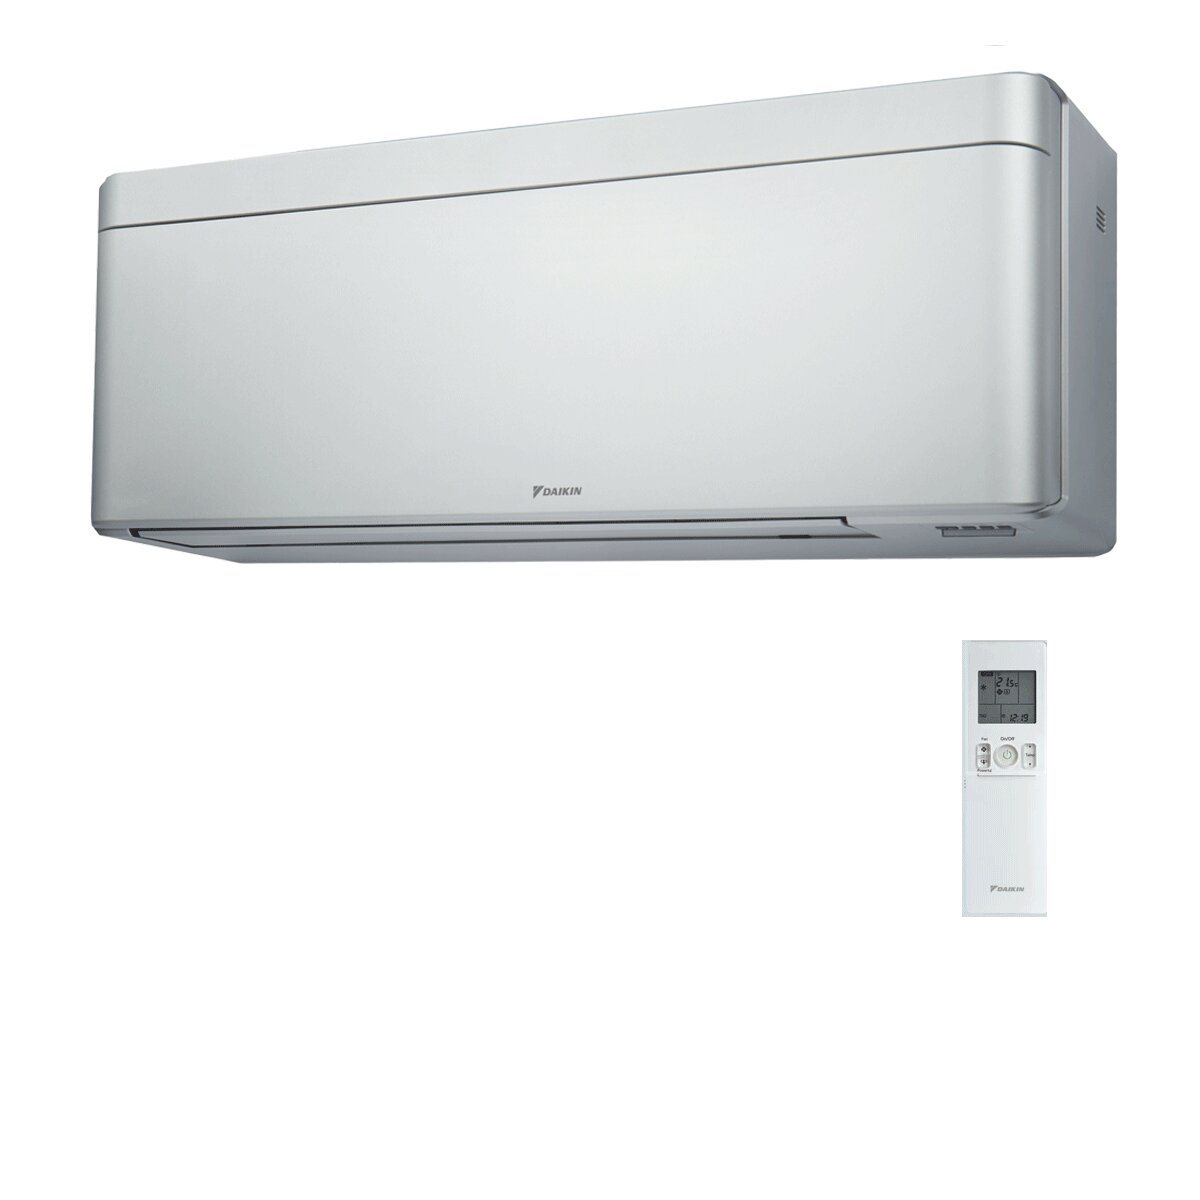 Daikin Stylish Silver penta split air conditioner 7000+9000+9000+12000+12000 BTU inverter A++ wifi external unit 7.8 kW